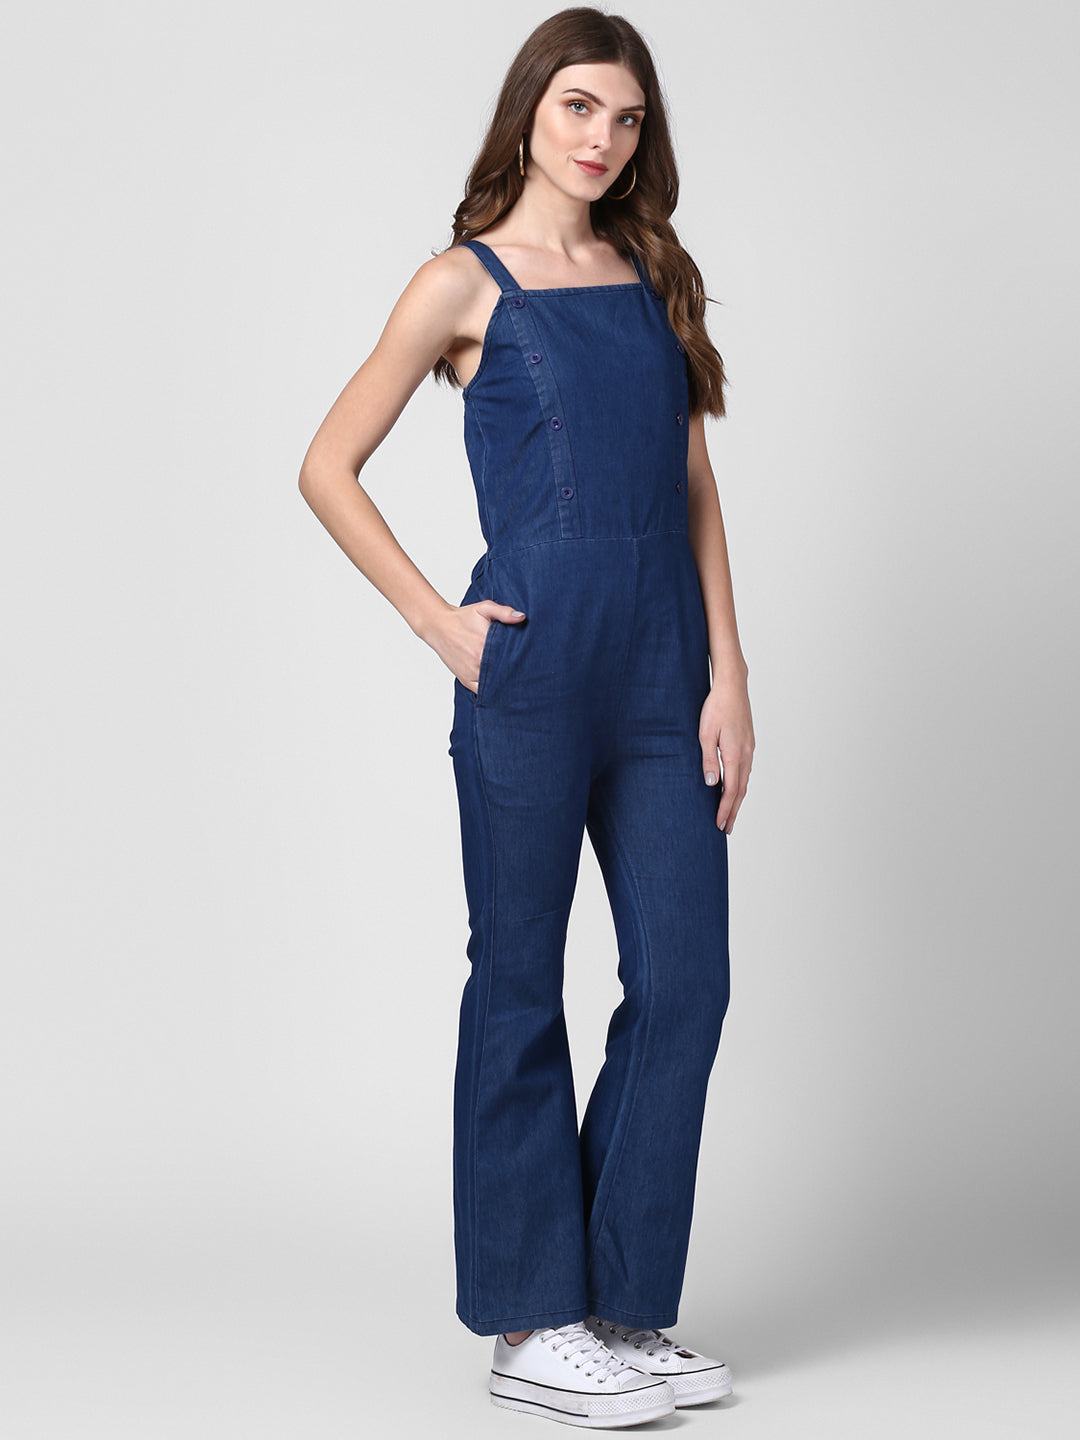 Women's Blue Denim Strap style Jumpsuit with bootcut pants